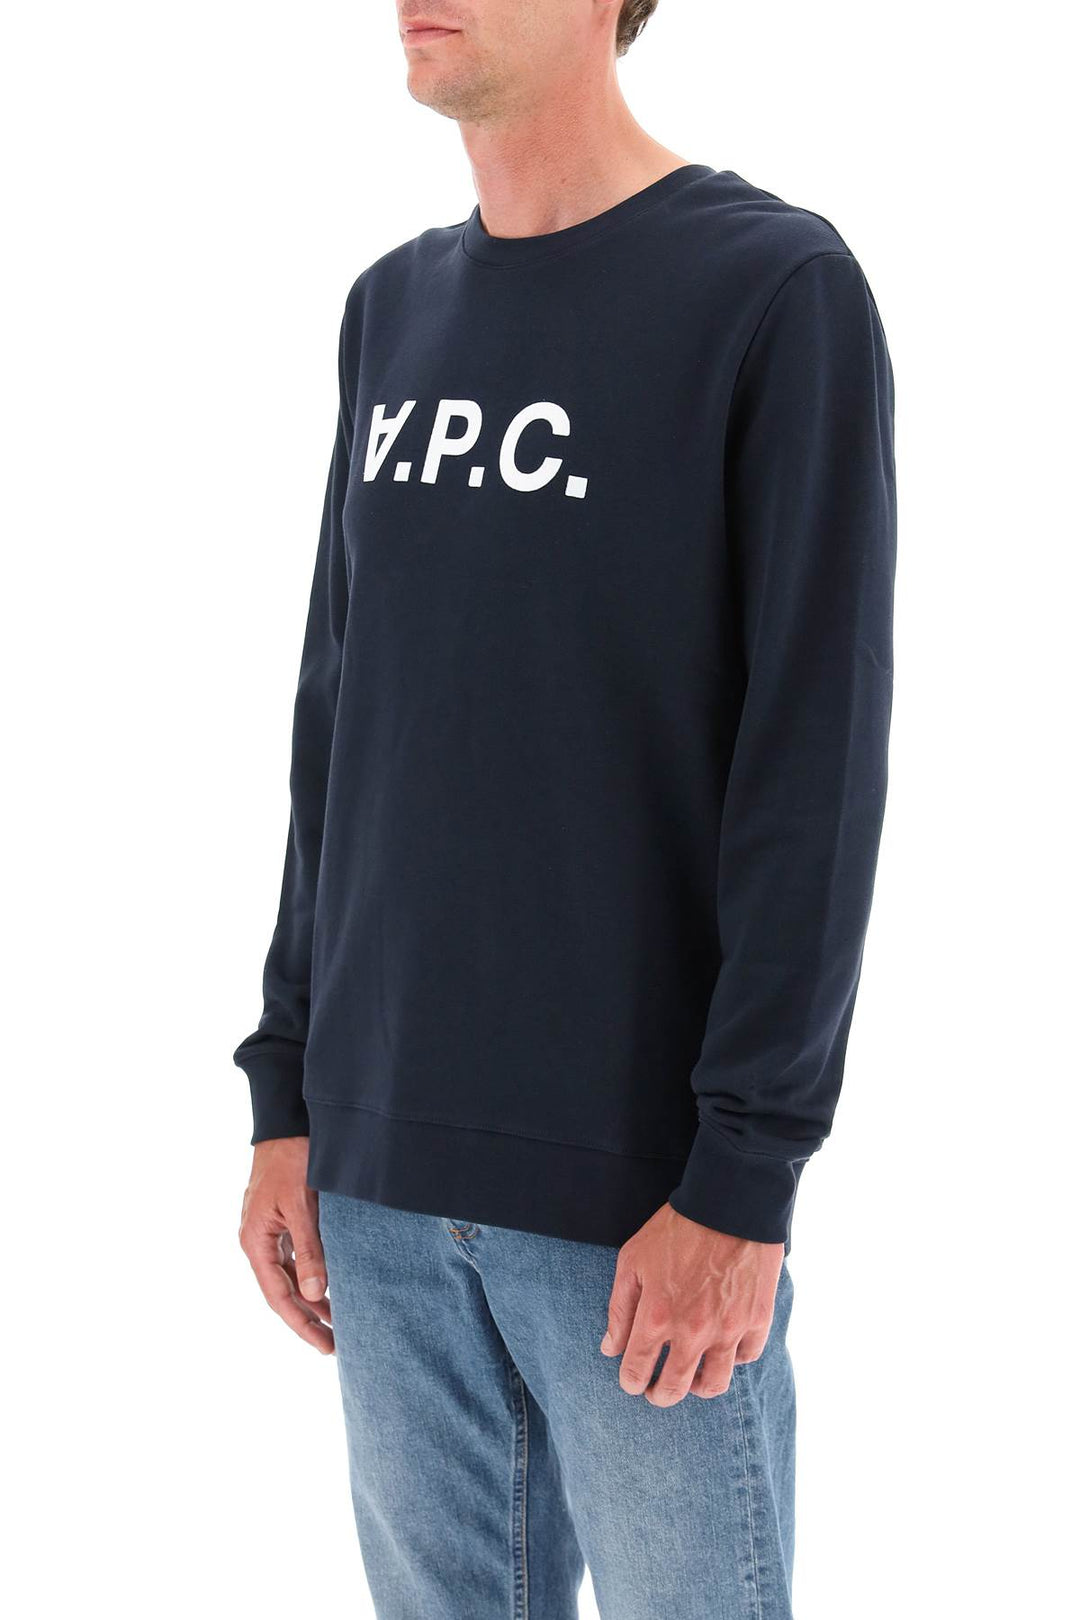 A.P.C. Flock V.P.C. Logo Sweatshirt   Blue